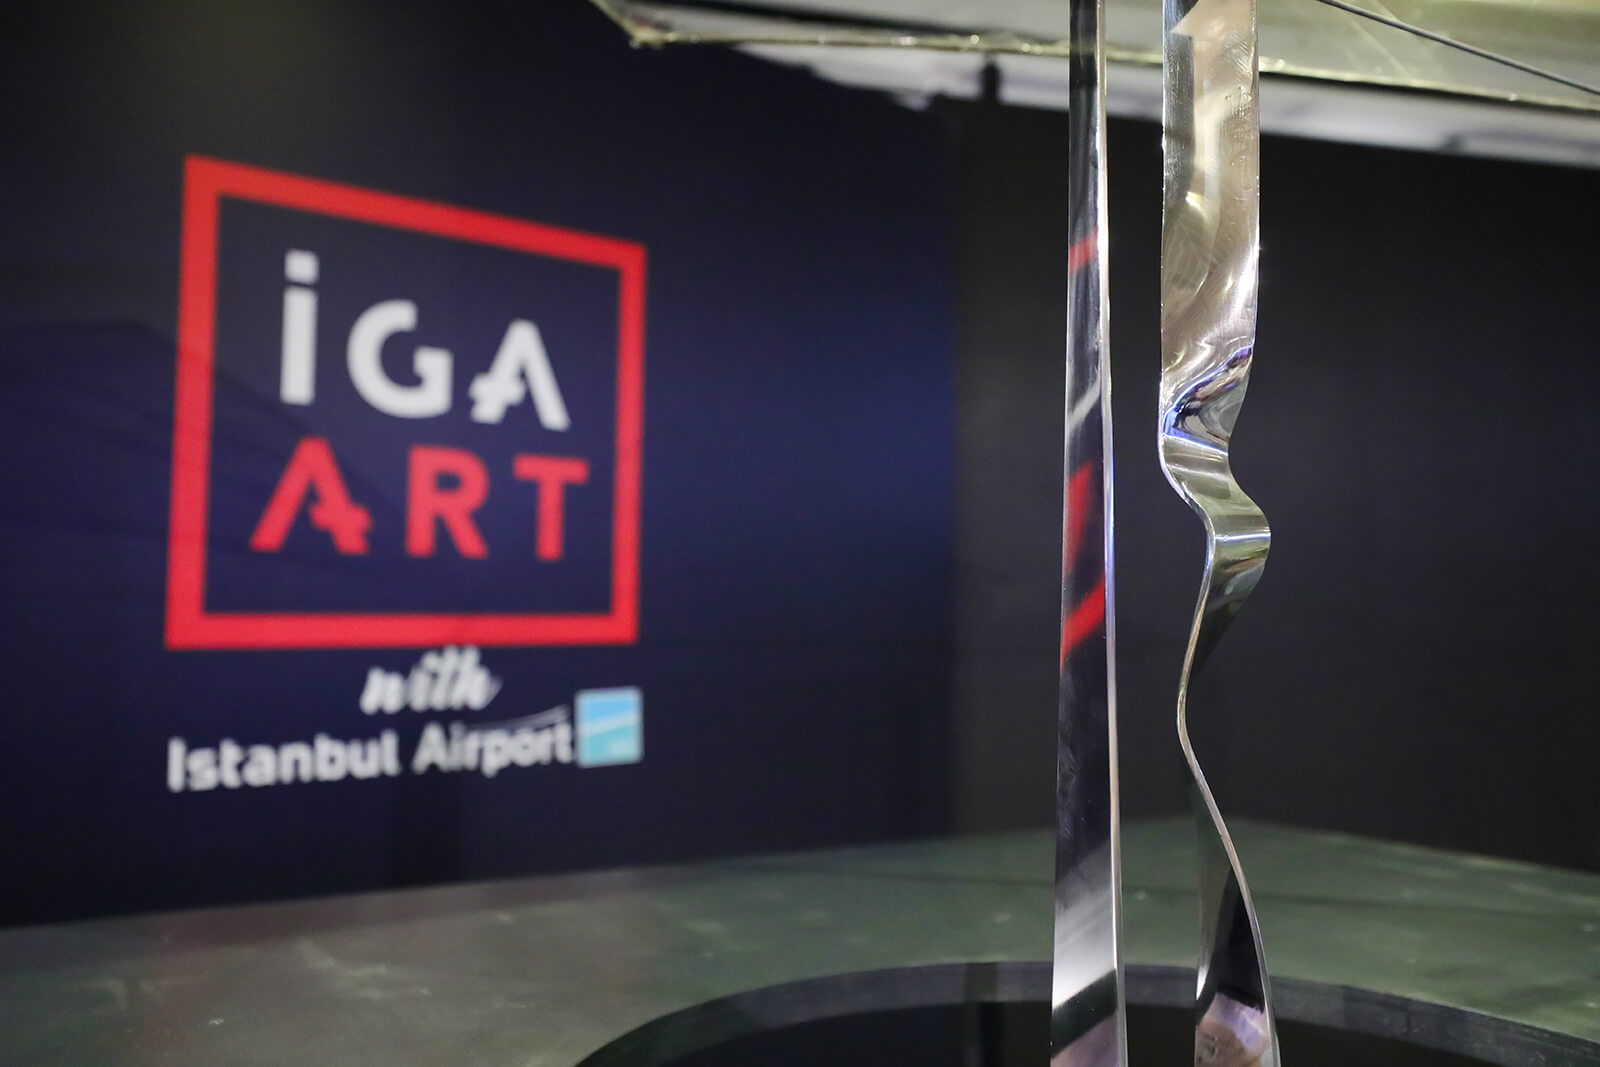 Winning proposal for İGA Art Contest by artist Hayri Karay | İGA ART Art Project Contest | Hayri Karay | STIRworld